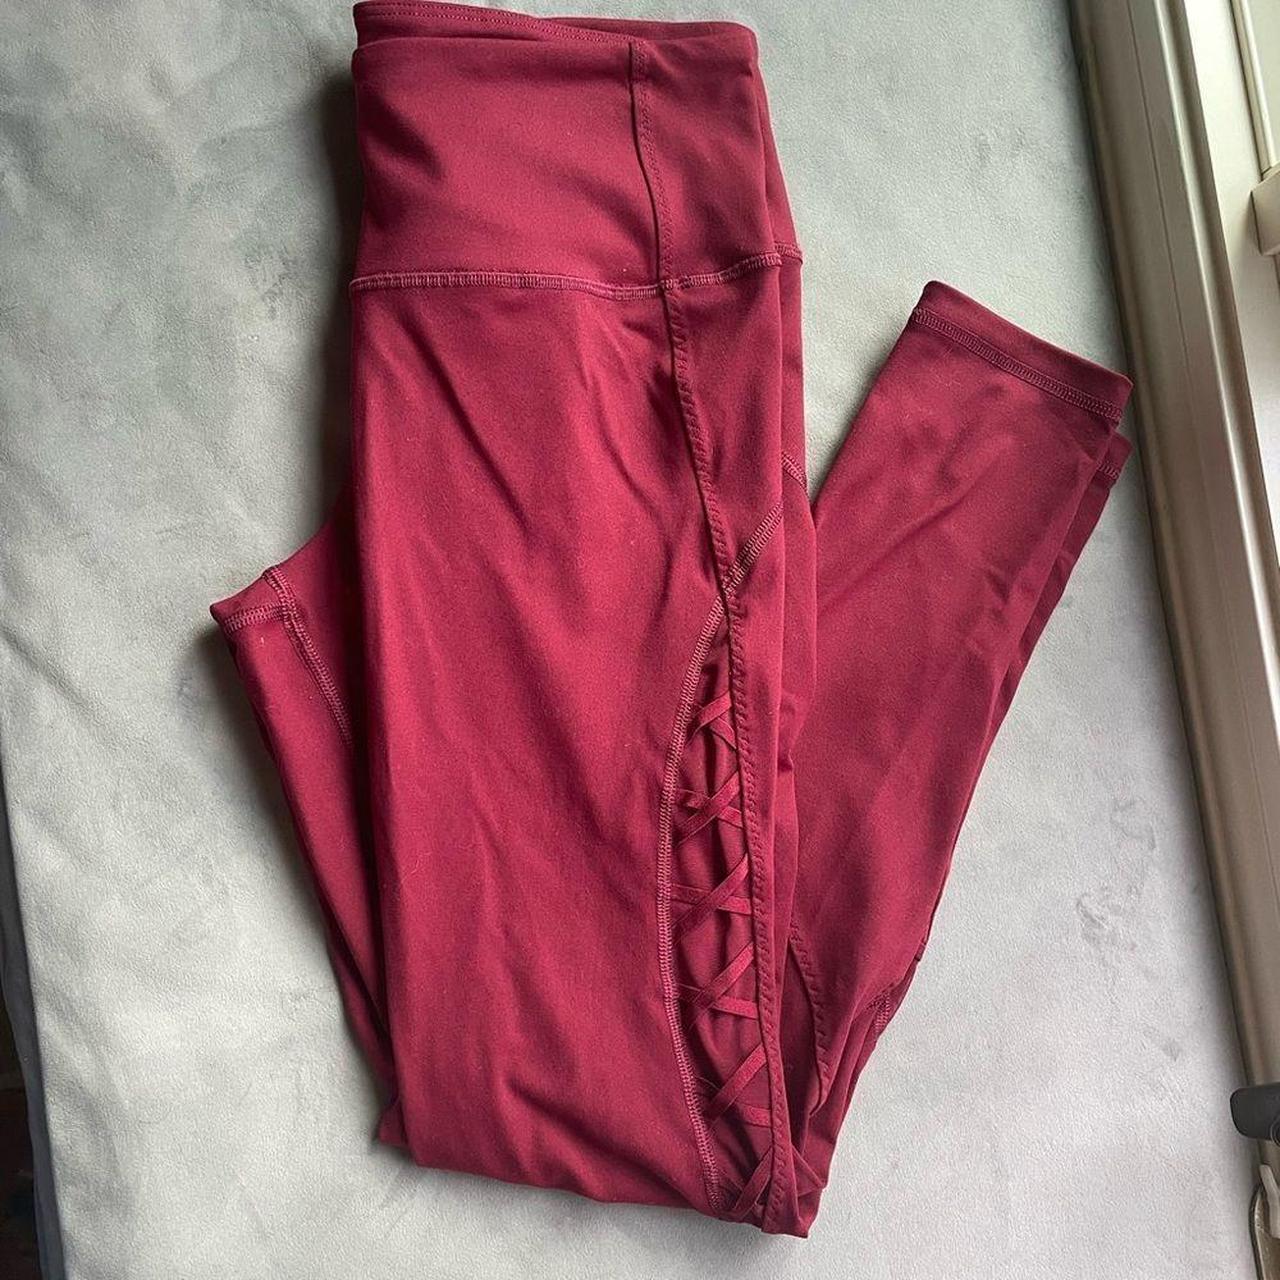 victoria’s secret red knockout leggings size medium